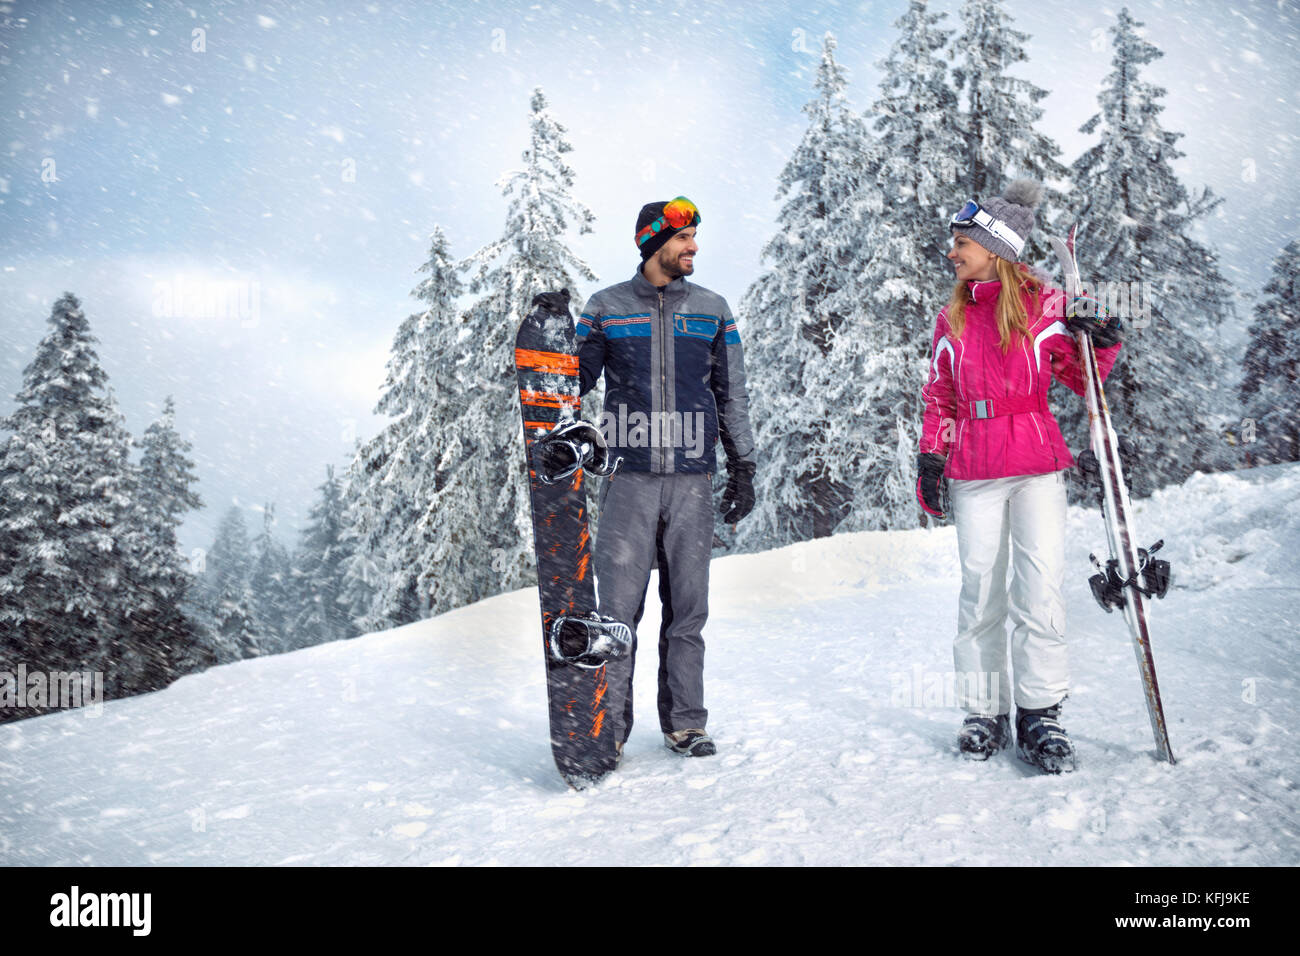 Skiing, winter, ski holiday – smiling couple on winter vacation Stock Photo